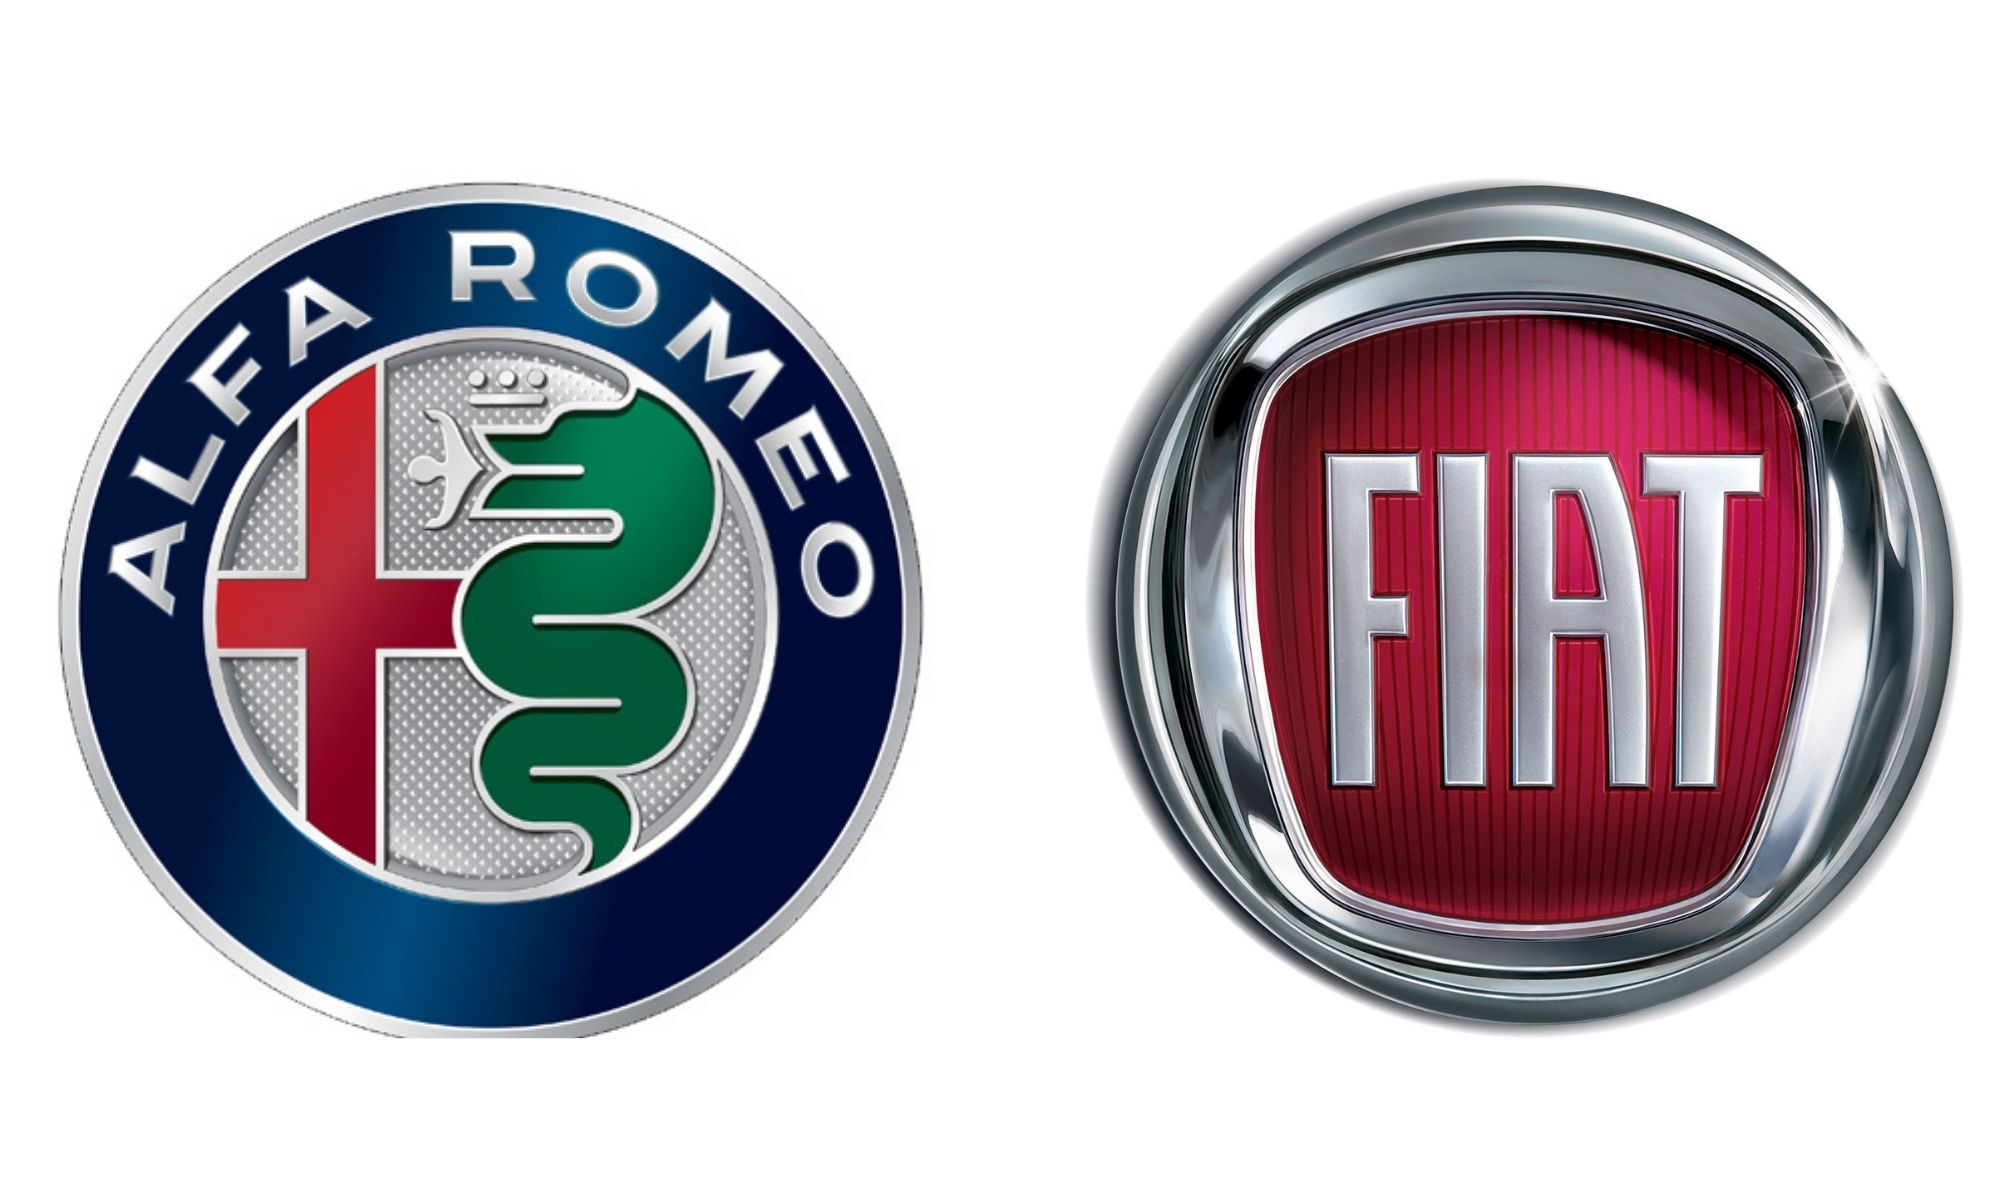 Alfa Romeo and Fiat